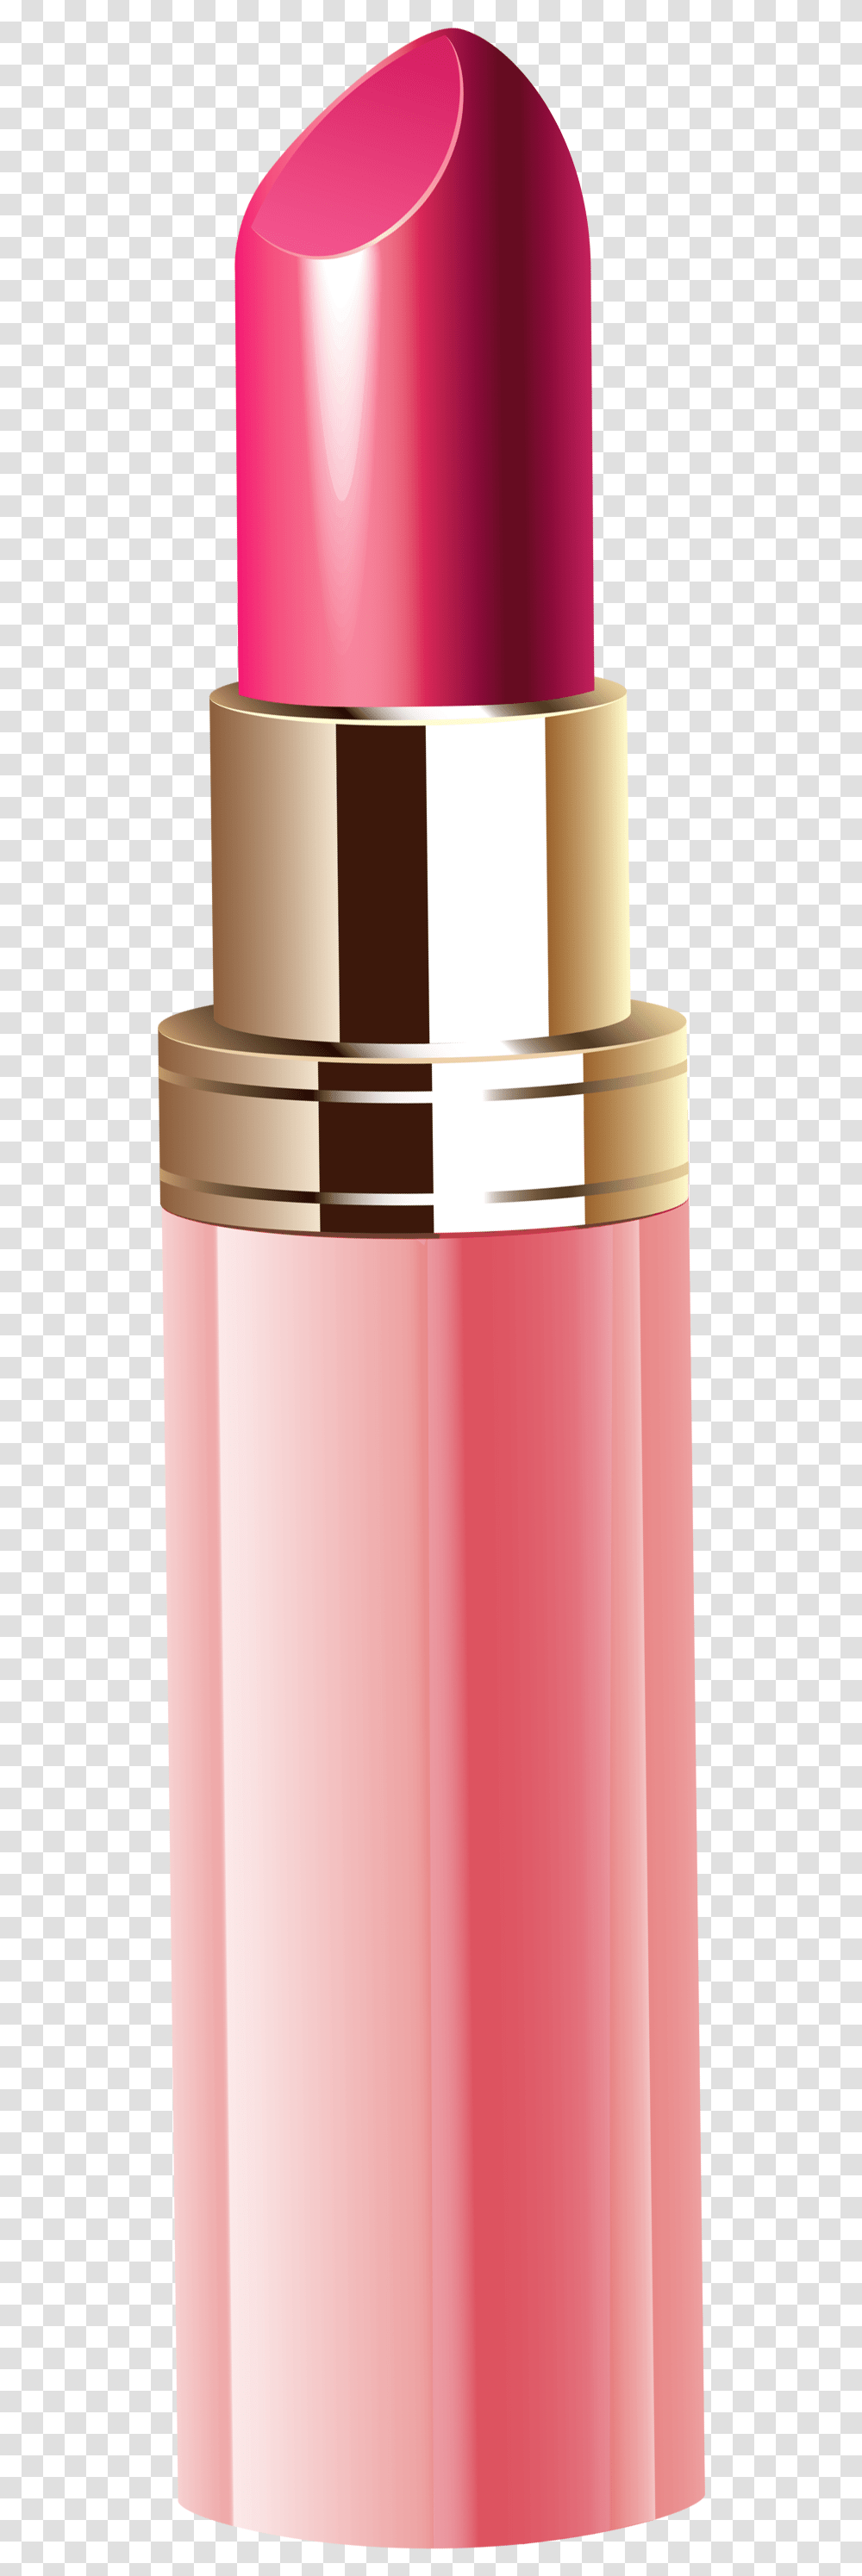 Pink Lipstick Clipart Image Pink Lipstick, Bottle, Cosmetics, Jar, Cylinder Transparent Png